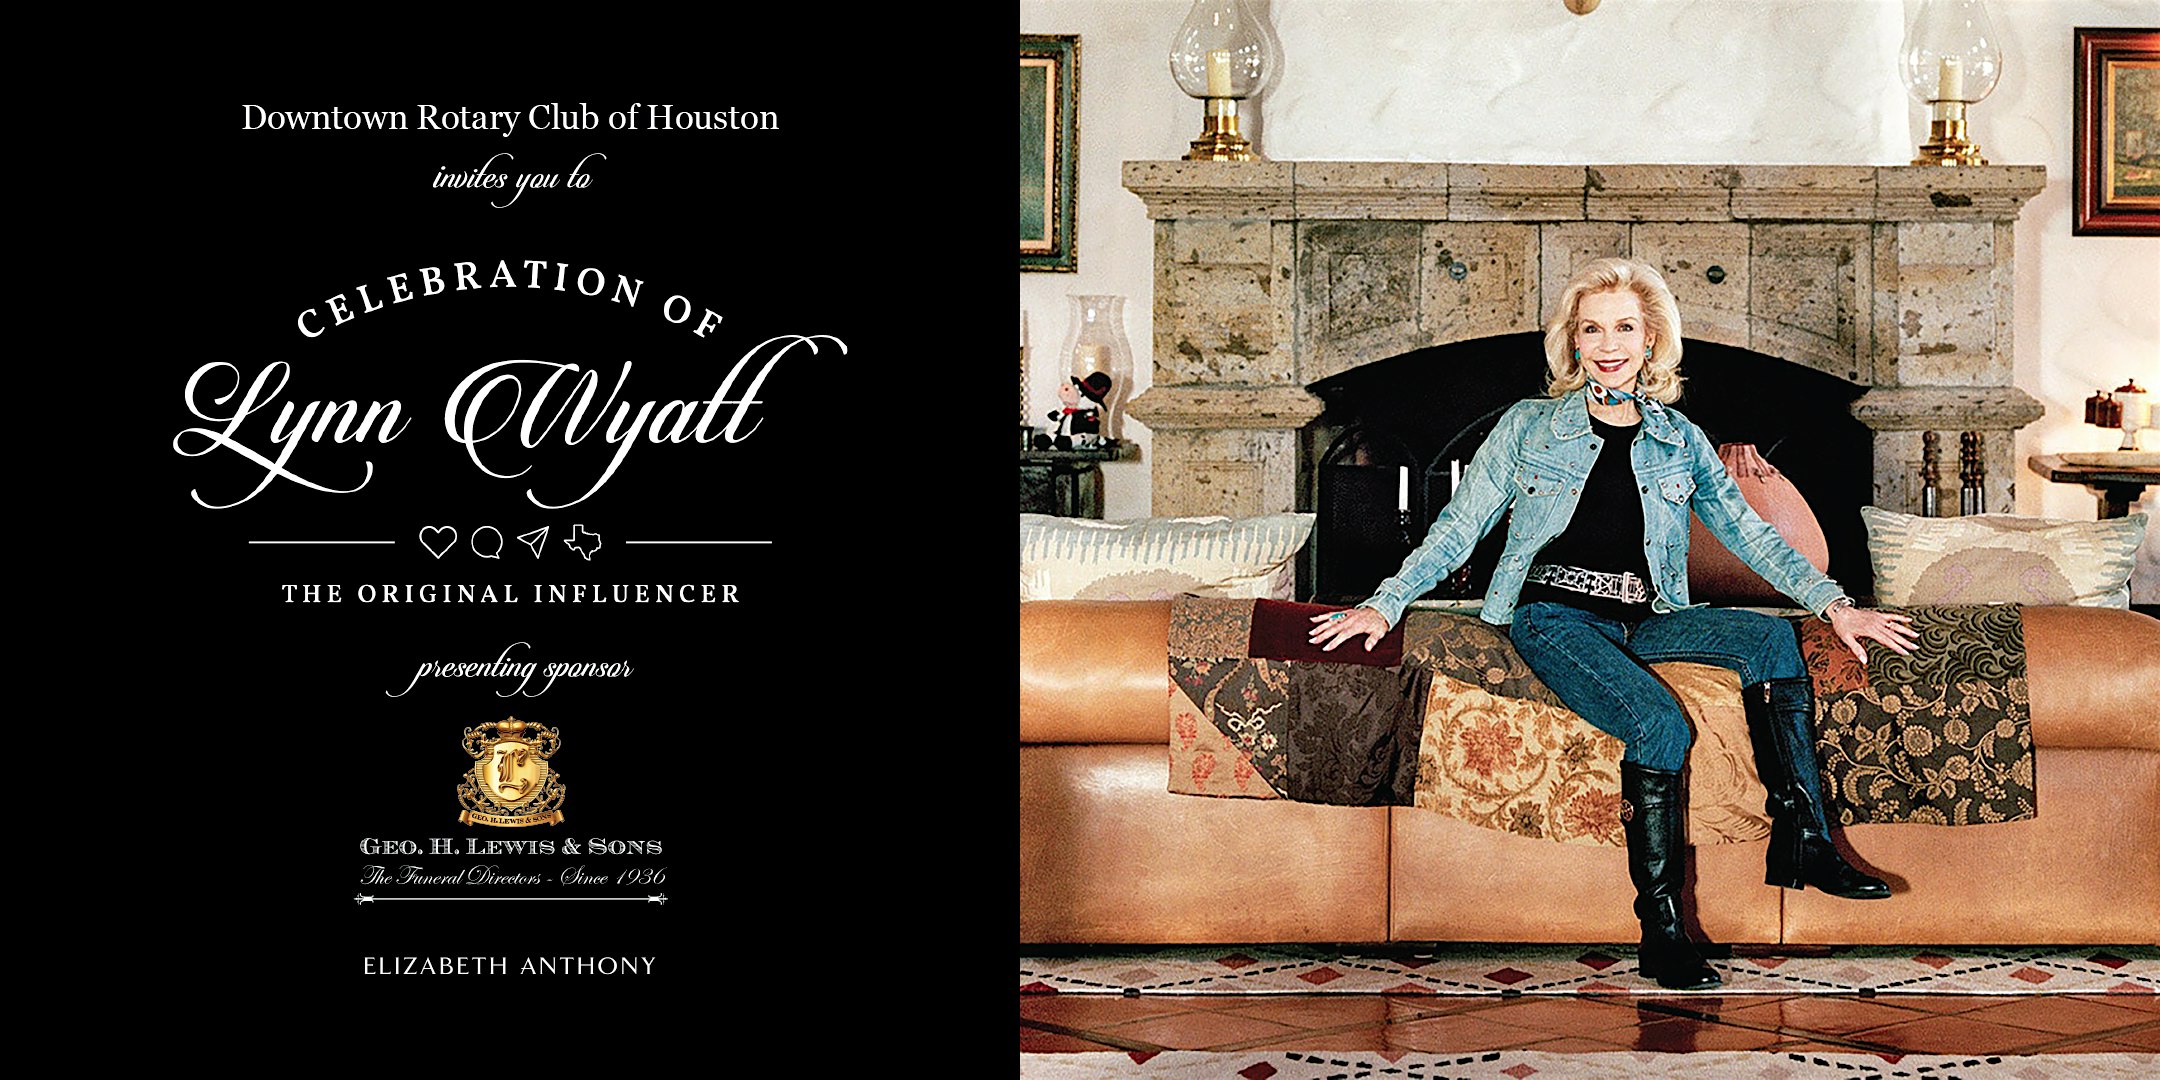 Celebration of Lynn Wyatt: The Original Influencer